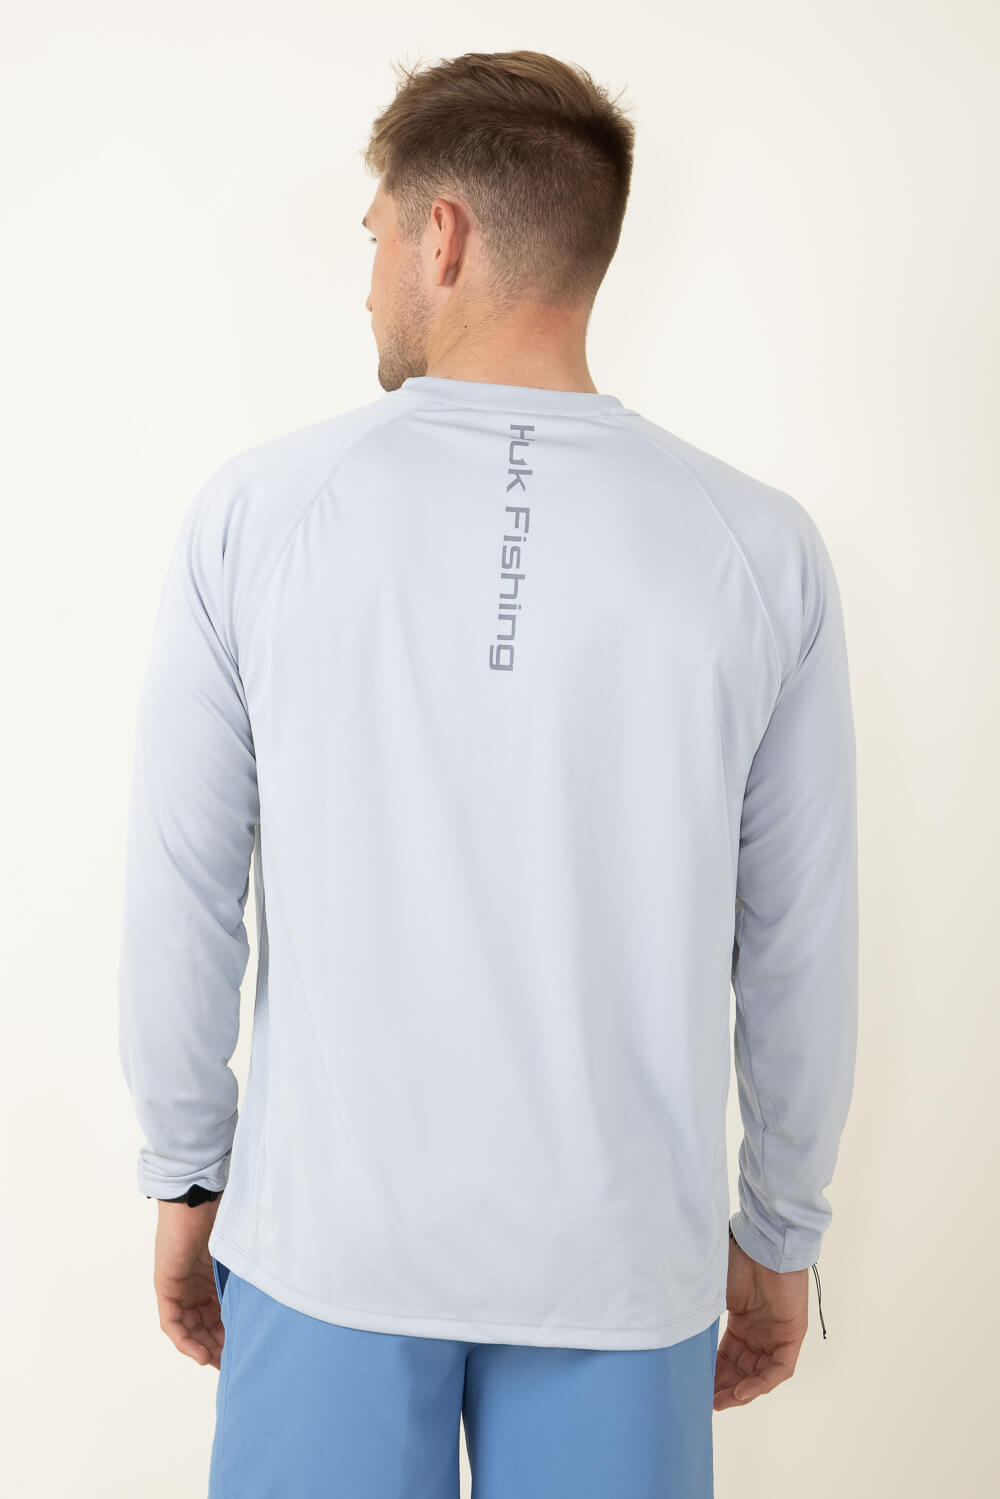 Huk Fishing Vented Pursuit Logo Graphic Long Sleeve Shirt for Men